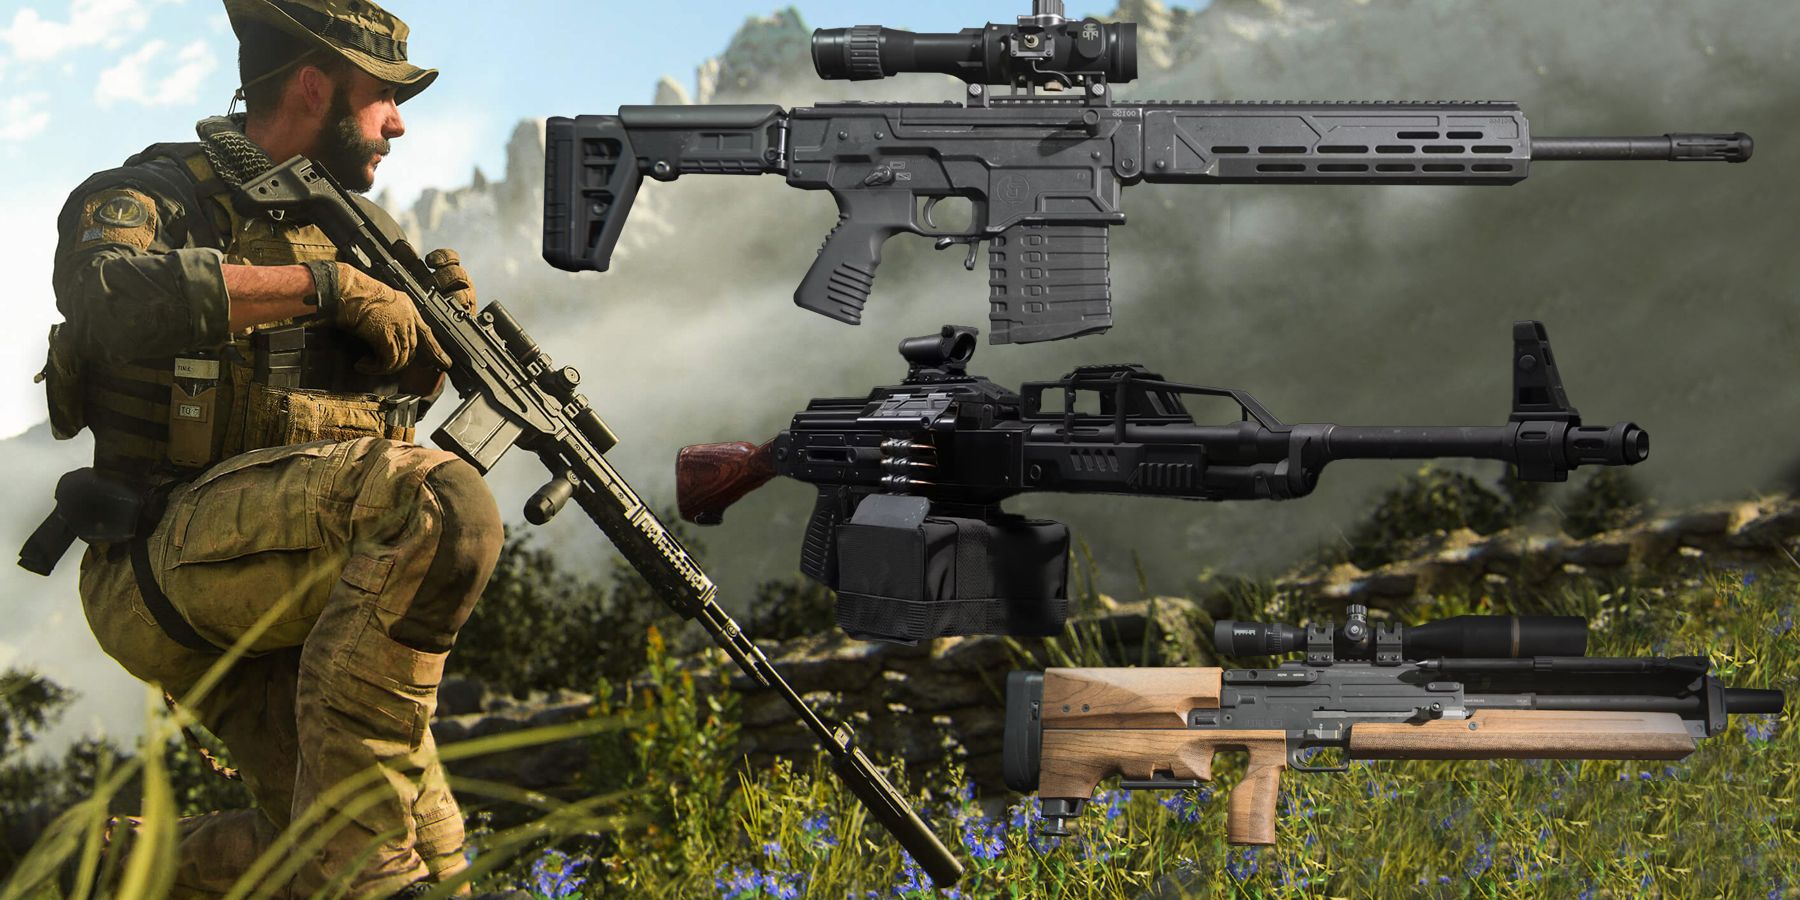 Best-Sniper-Rifles-In-Call-Of-Duty-Modern-Warfare-3,-Ranked